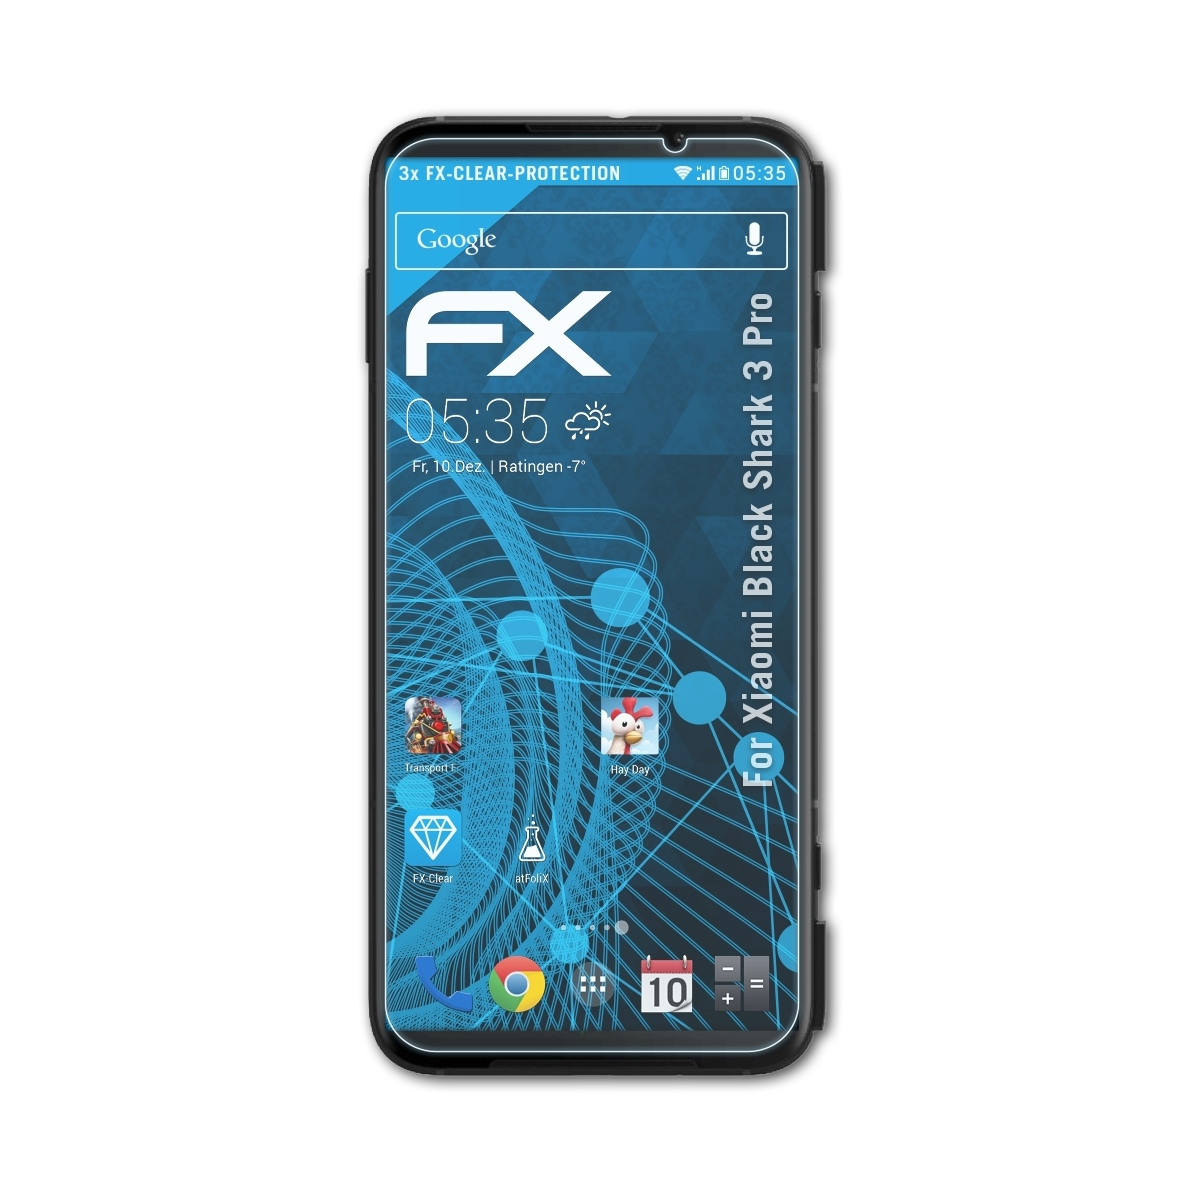 Displayschutz(für Pro) Shark ATFOLIX Black Xiaomi FX-Clear 3x 3